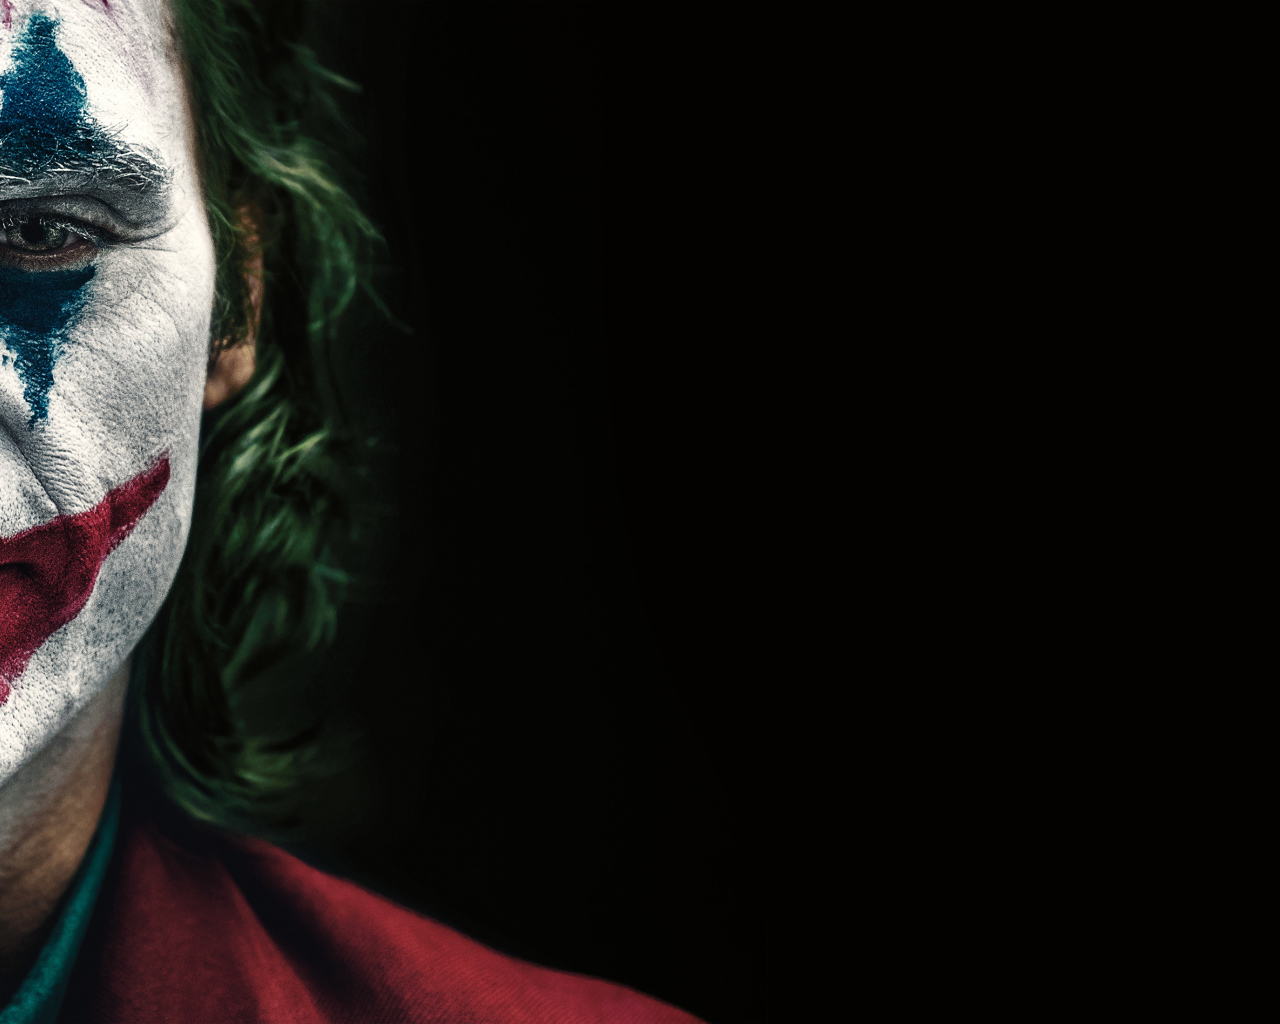 Joker movie poster on a black background, 2019